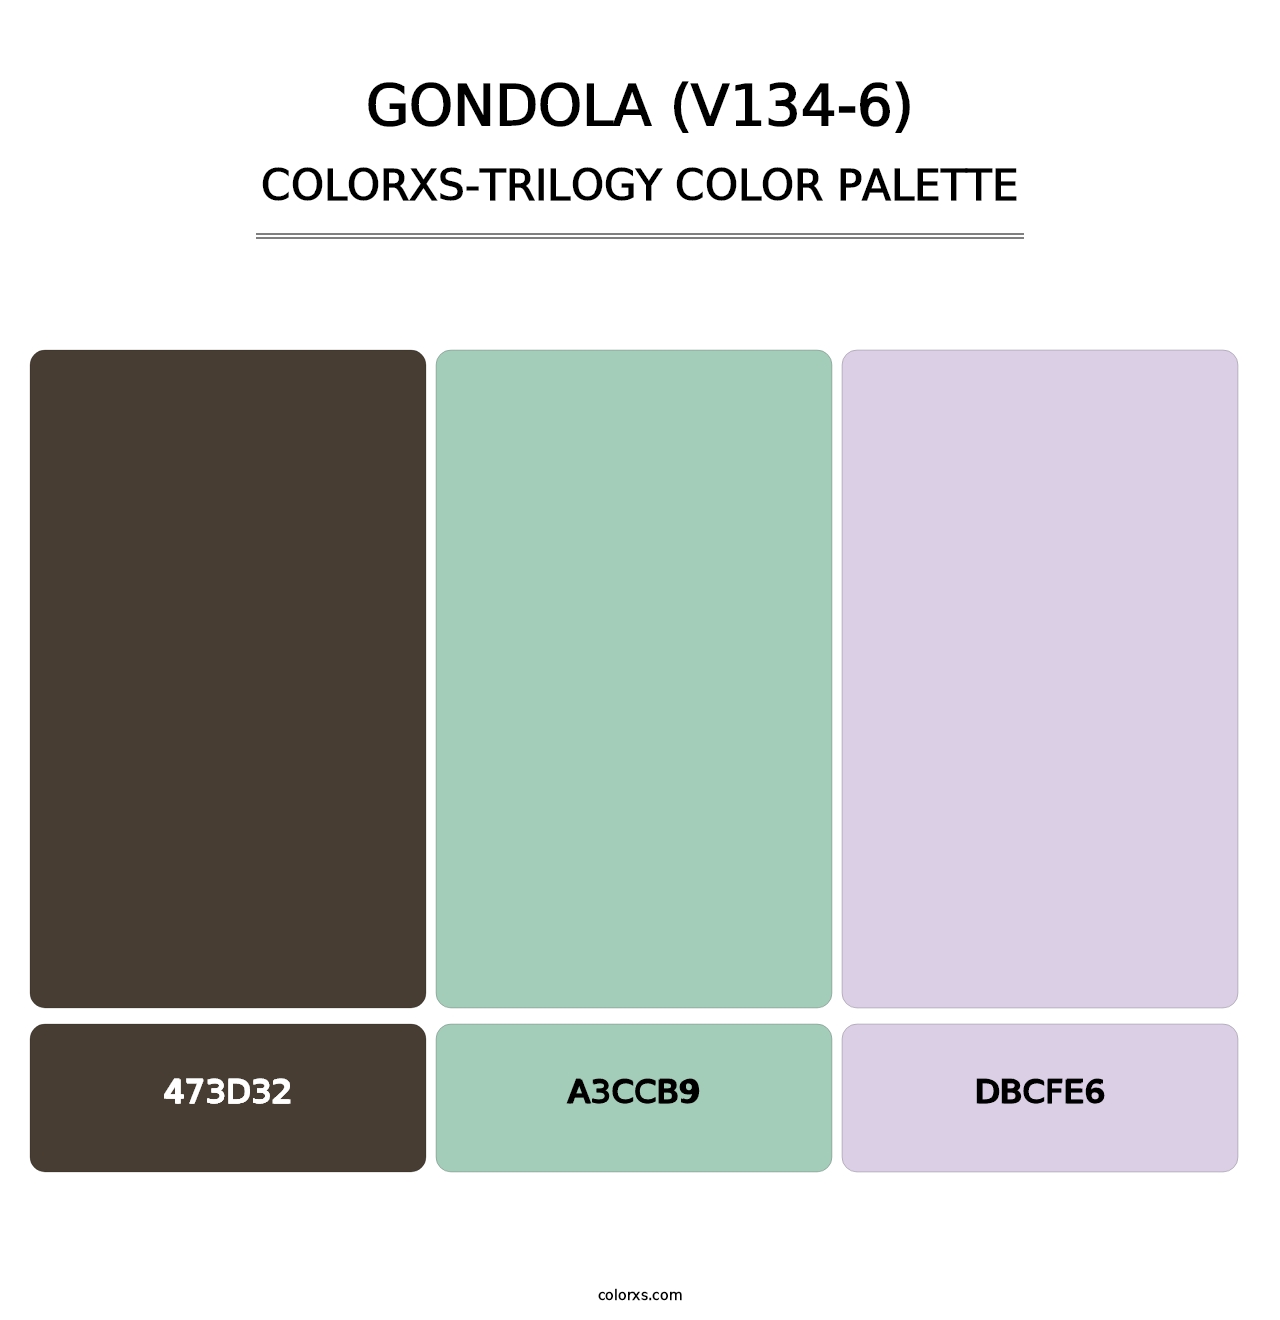 Gondola (V134-6) - Colorxs Trilogy Palette